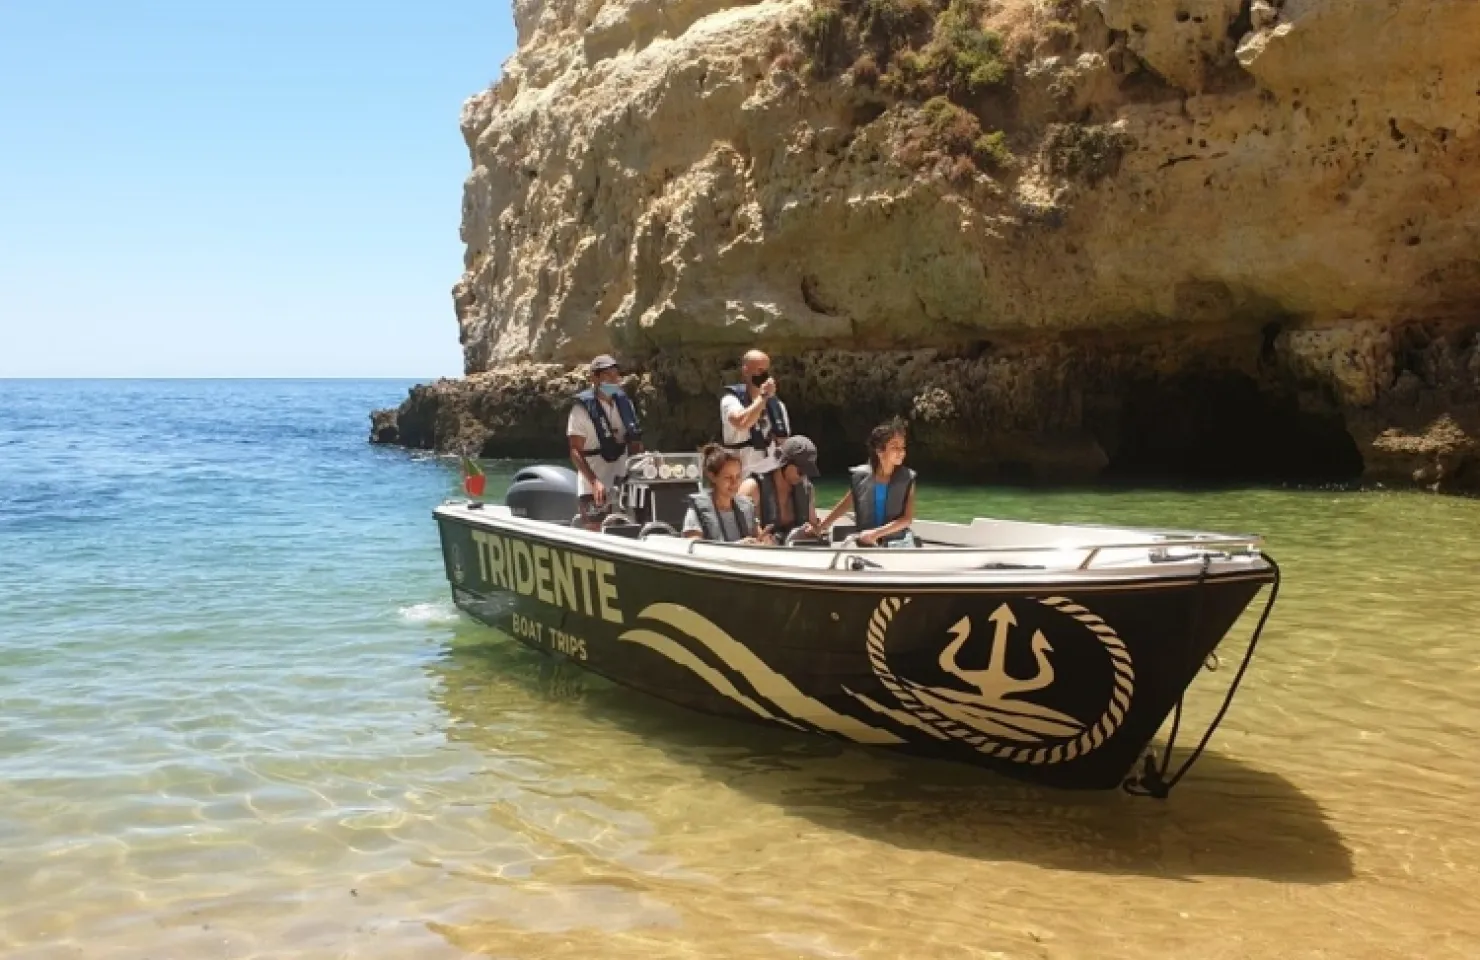 Benagil Cave Cruise by Tridente Boat Trips - Vilamoura Boat Trips